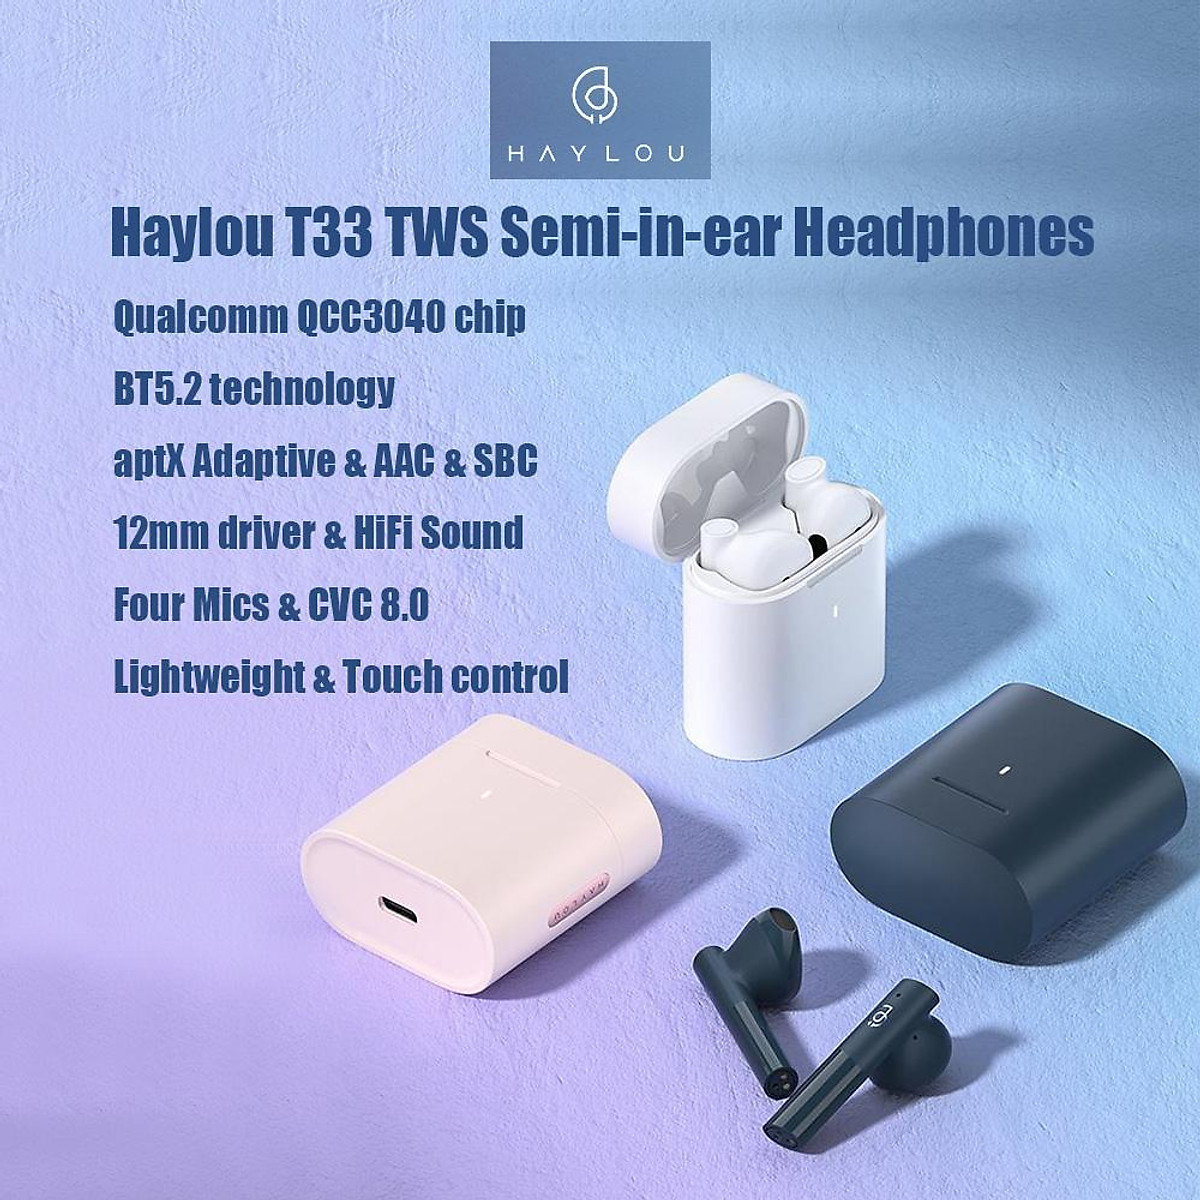 Haylou T33 BT5.2 Wireless Earphone, Semi-in-ear Headphones w/Qualcomm QCC3040 Chip/aptX Adaptive & AAC & SBC